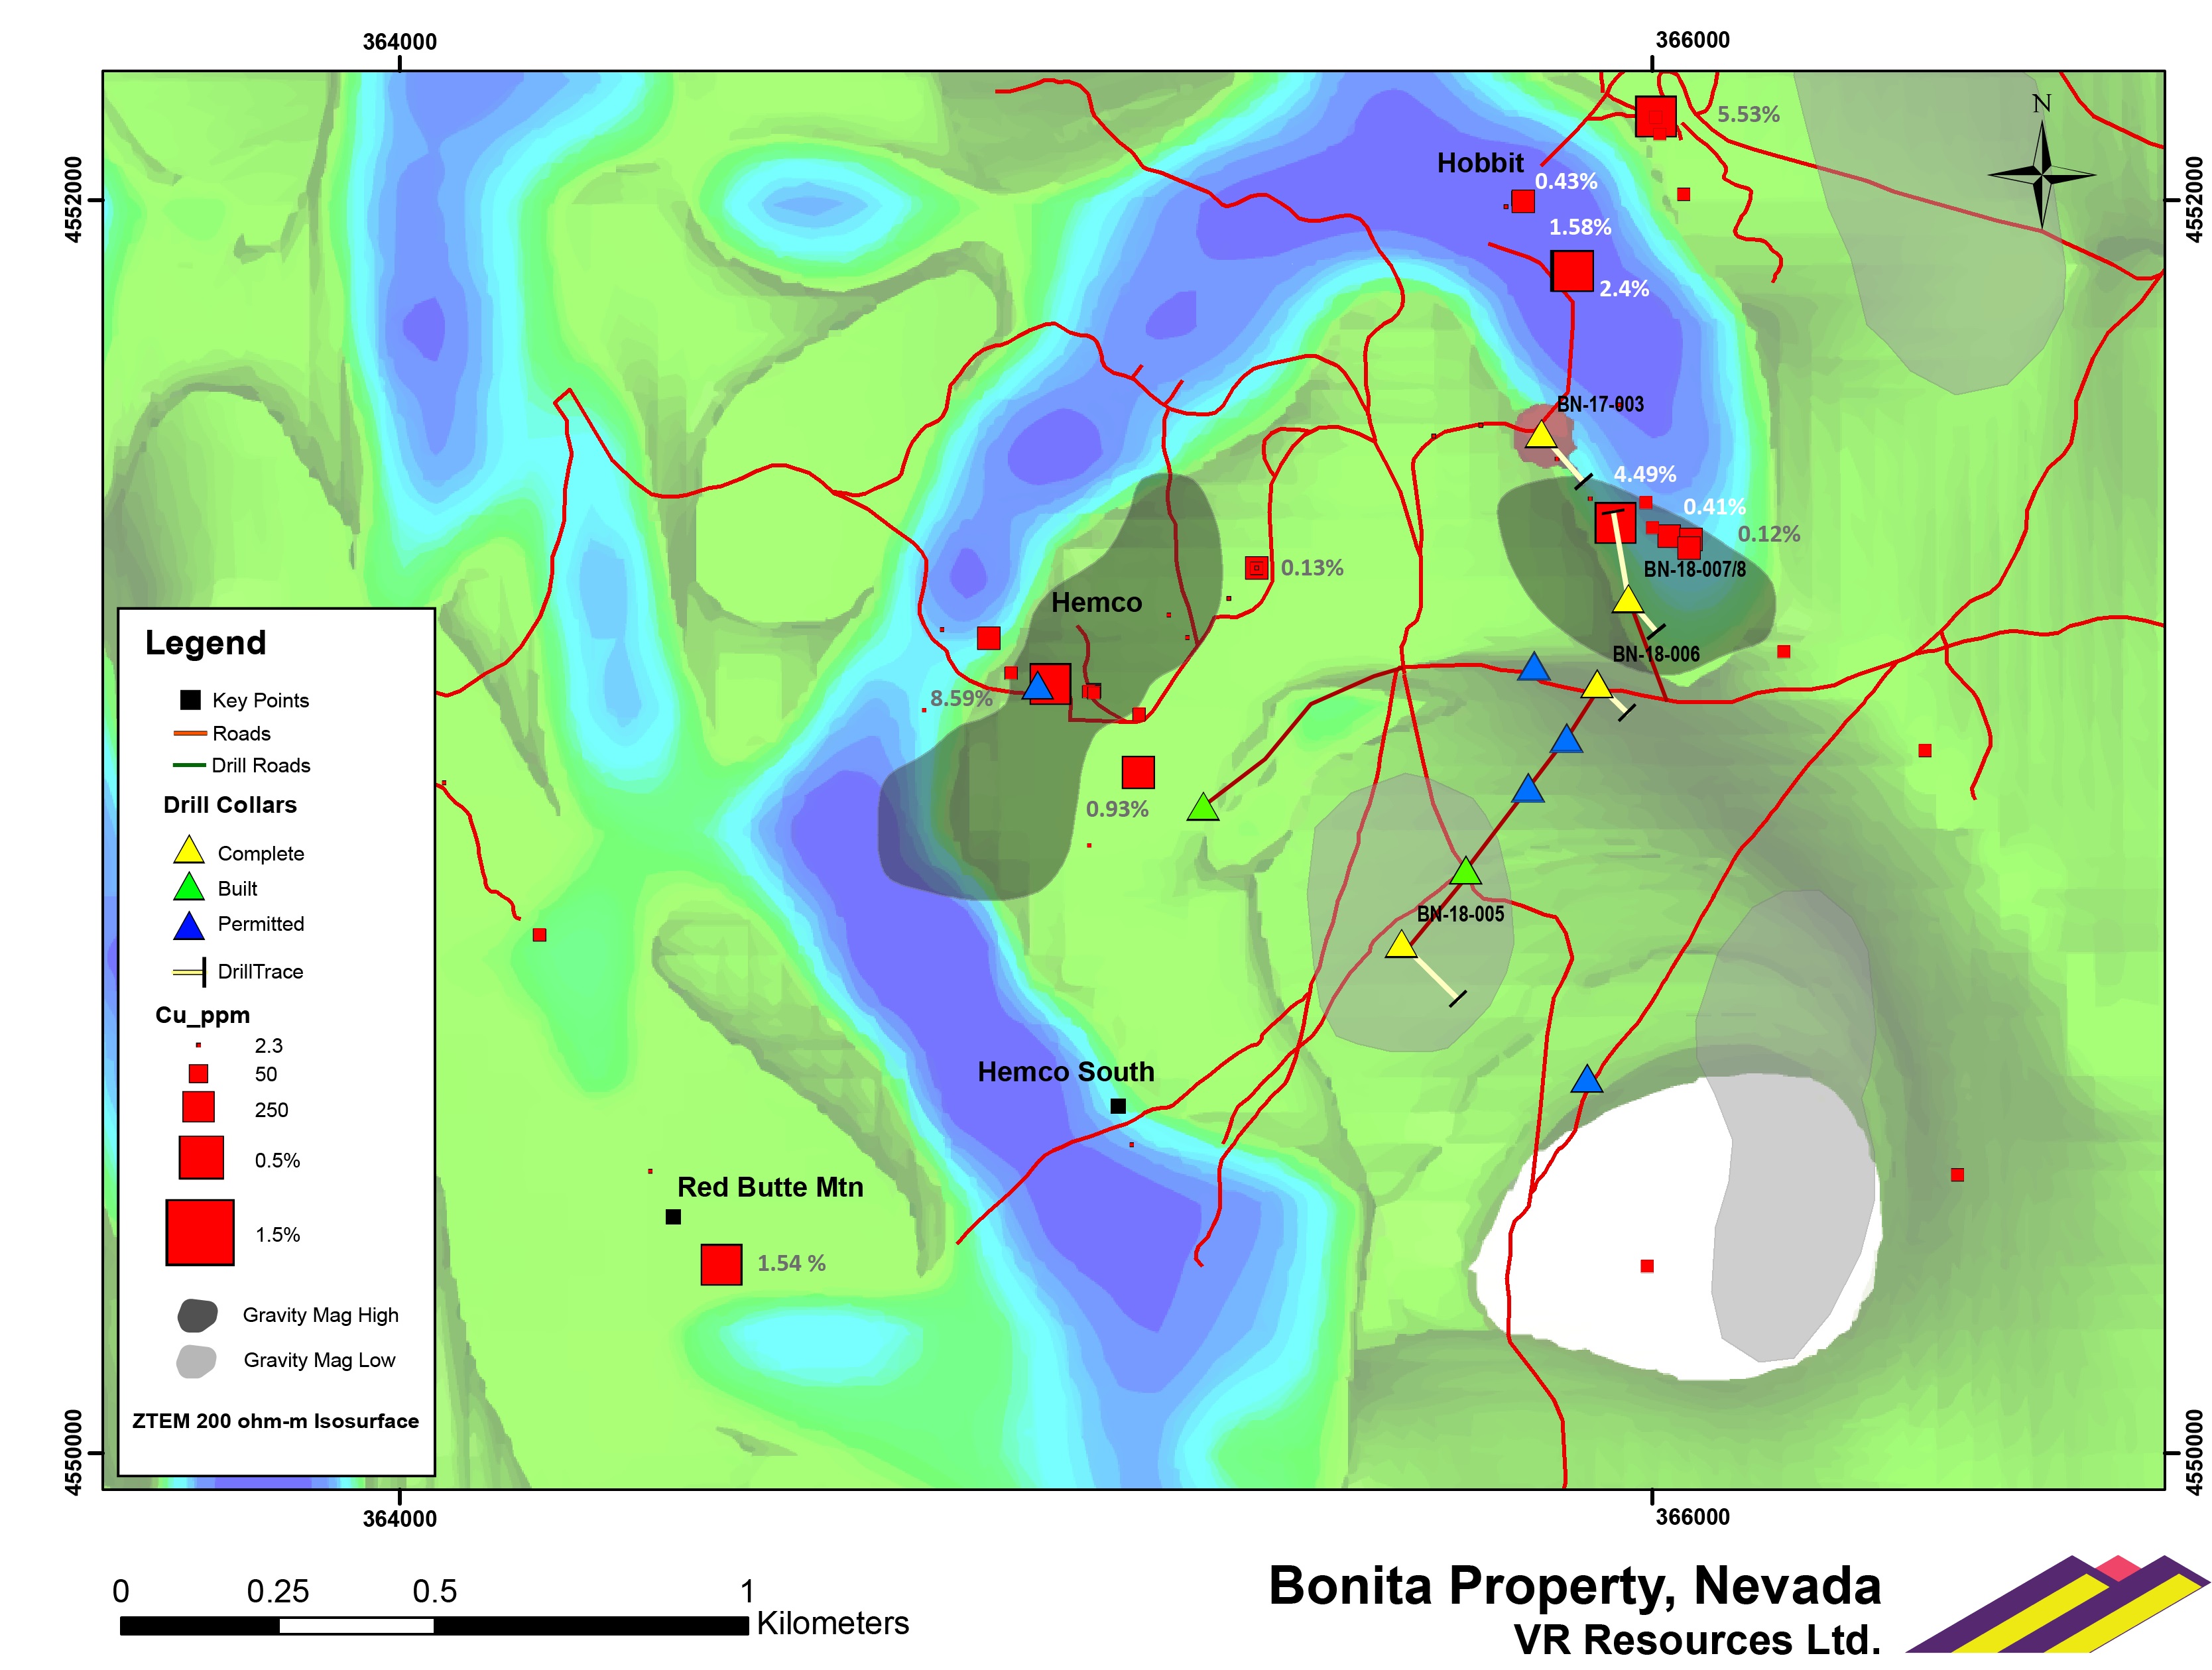 Figure 2. Bonita Property, Nevada